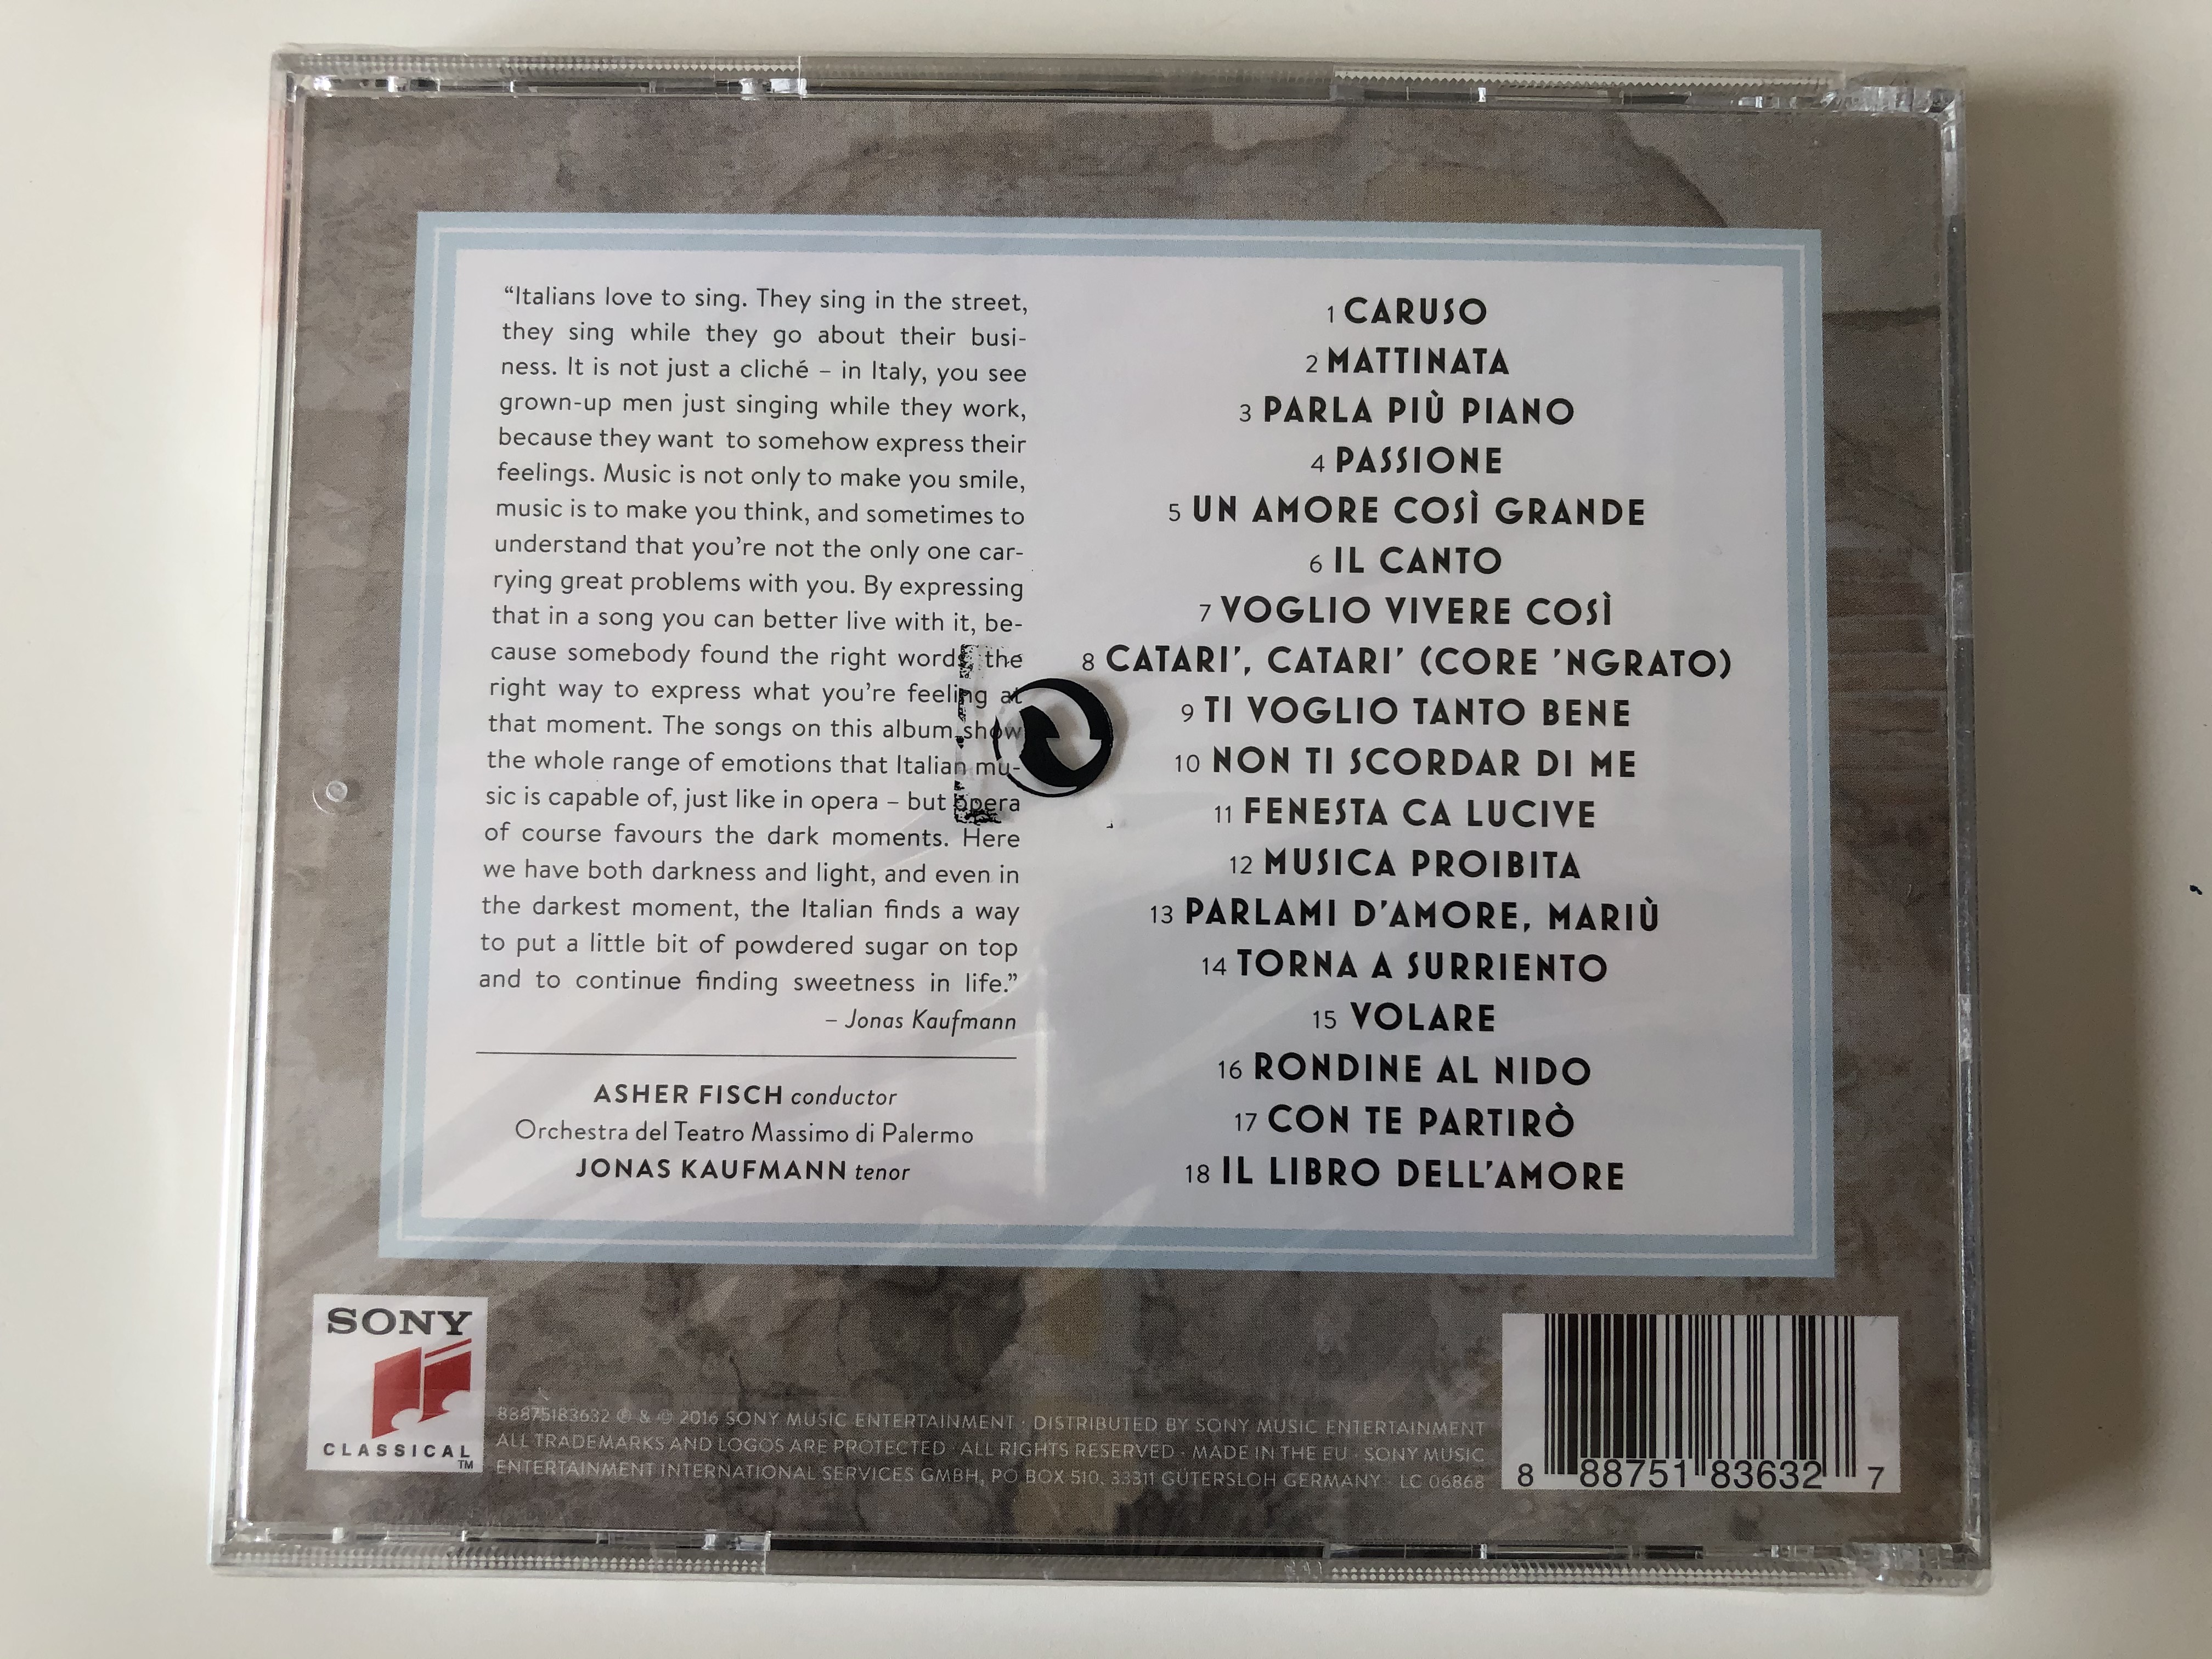 Dolce Vita - Jonas Kaufmann ‎/ The New Album, His tribute to Italian Music,  icnl. Caruso, Mattinata, Parla Piu Piano (The Godfather theme), Core  'Ngrato, Passione / Sony Classical ‎Audio CD 2016 / 888751836327 -  bibleinmylanguage